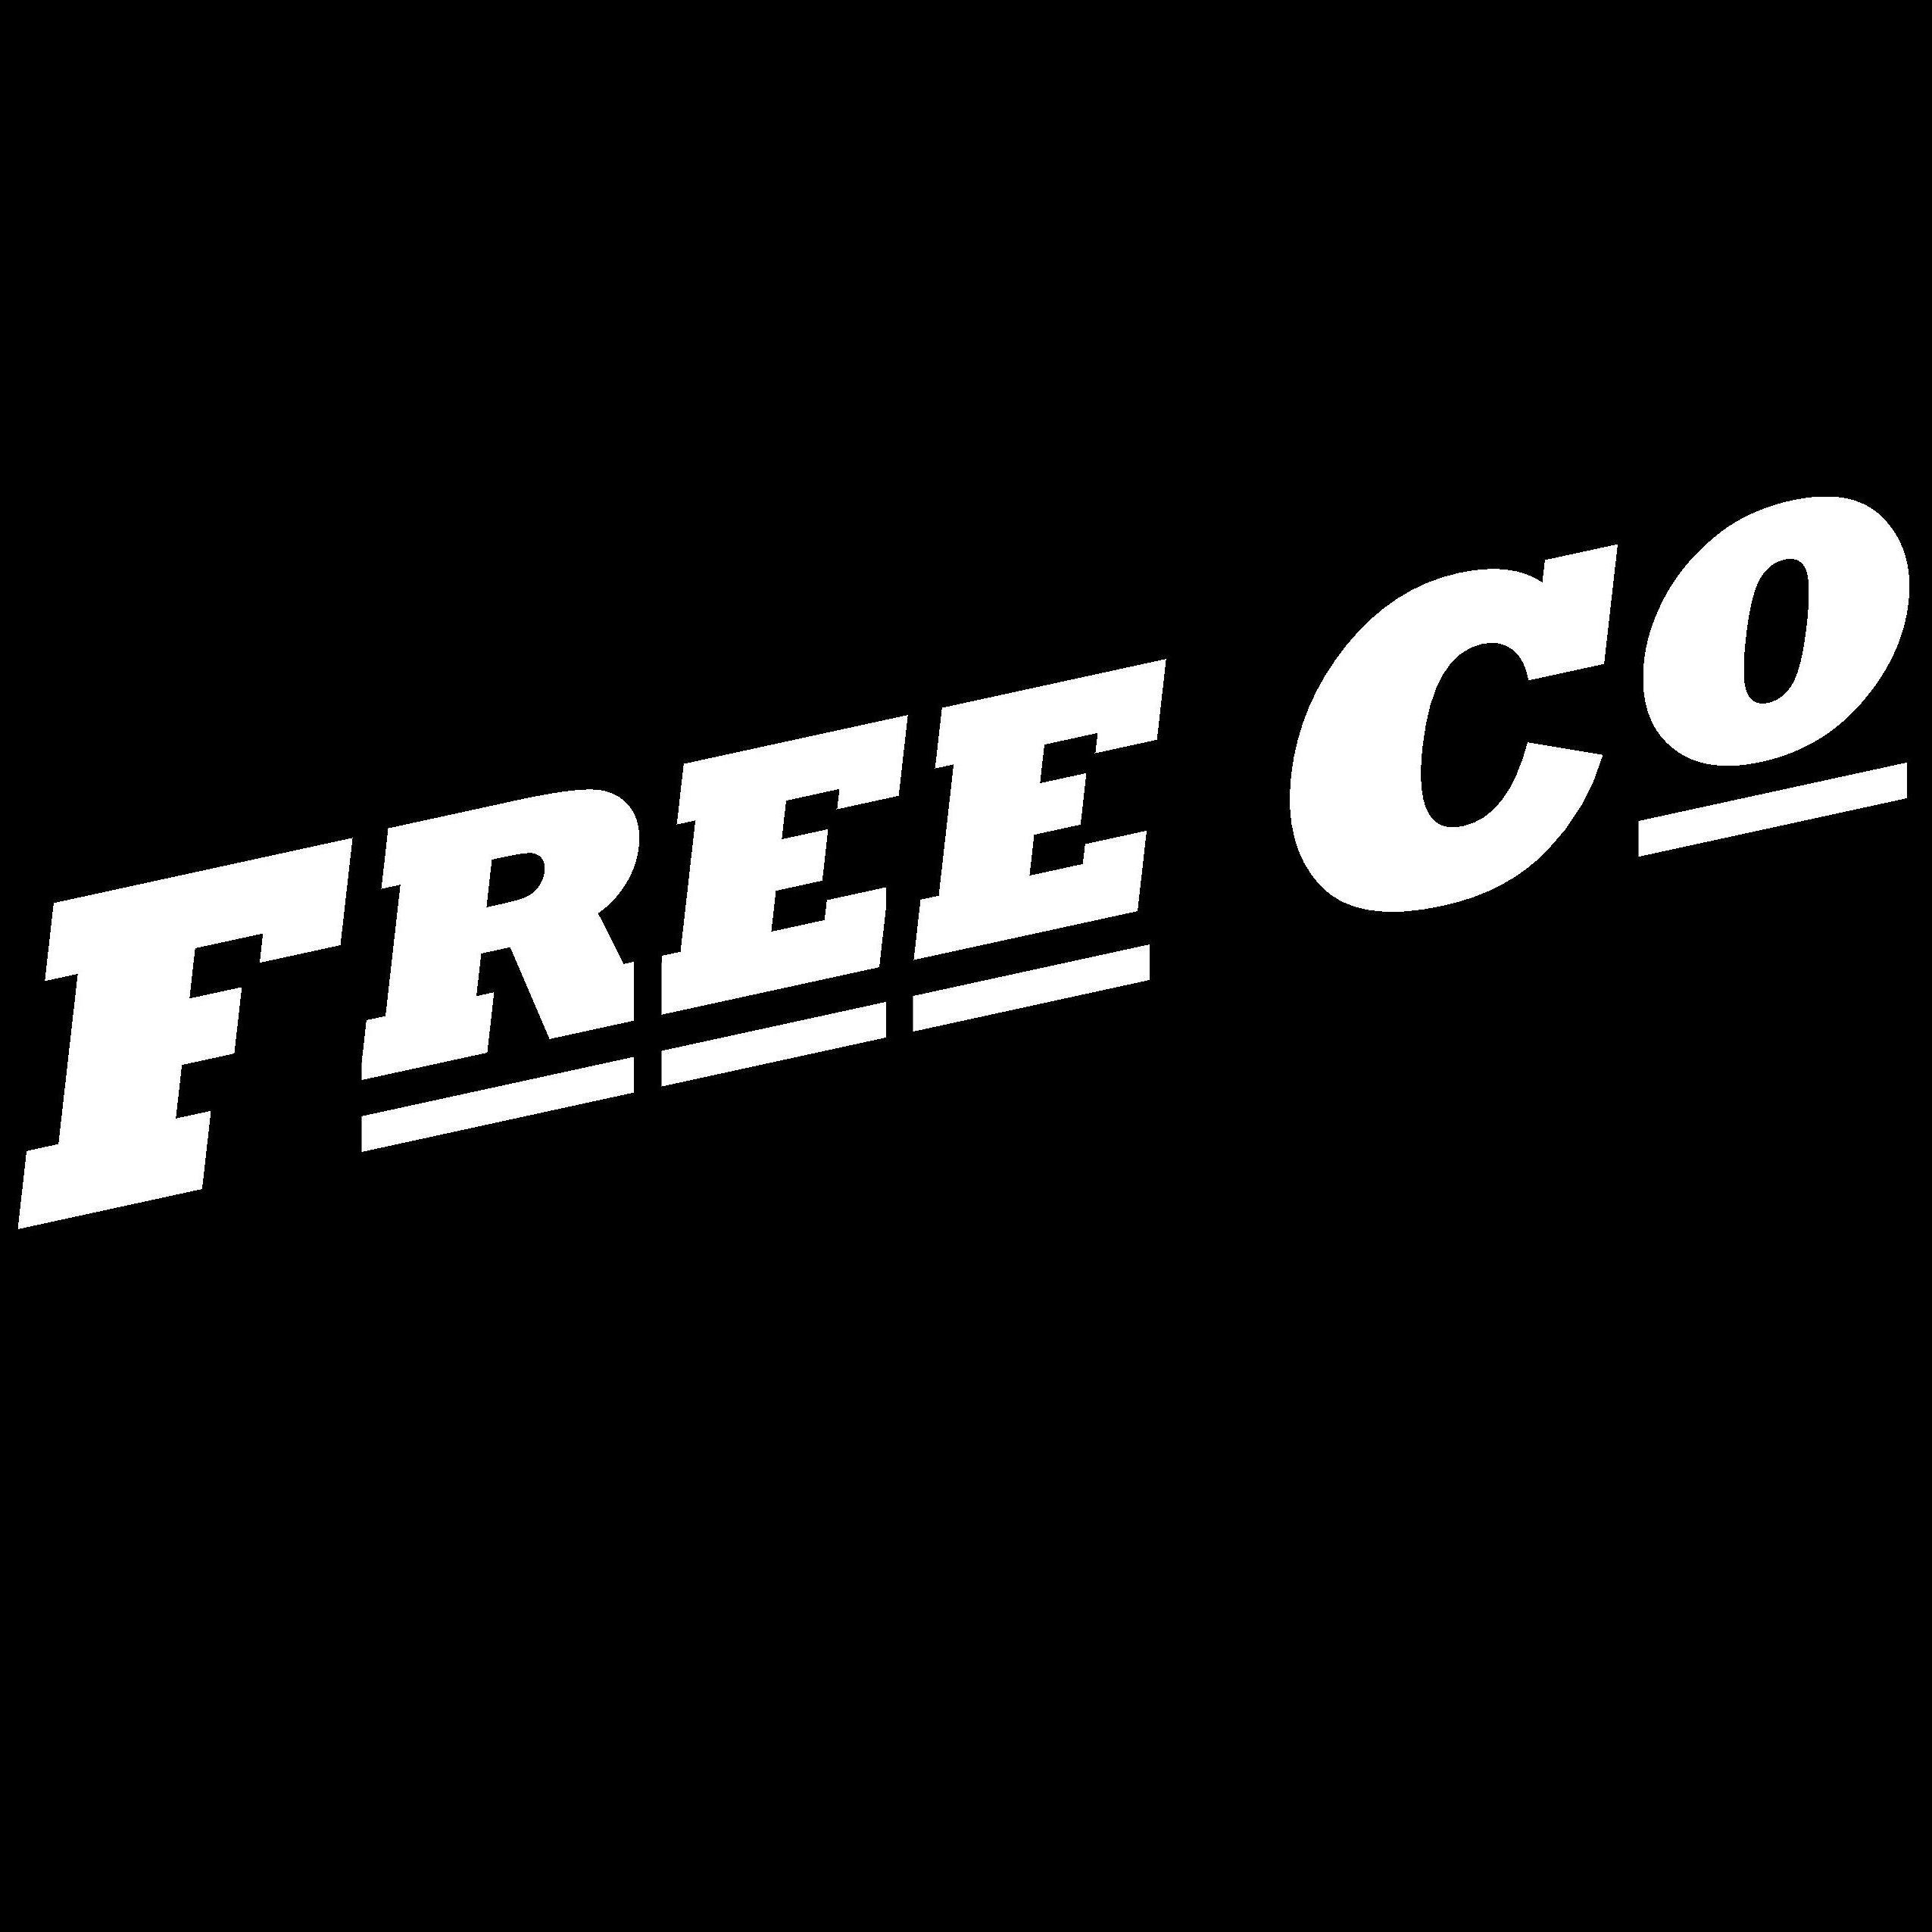 Free Company